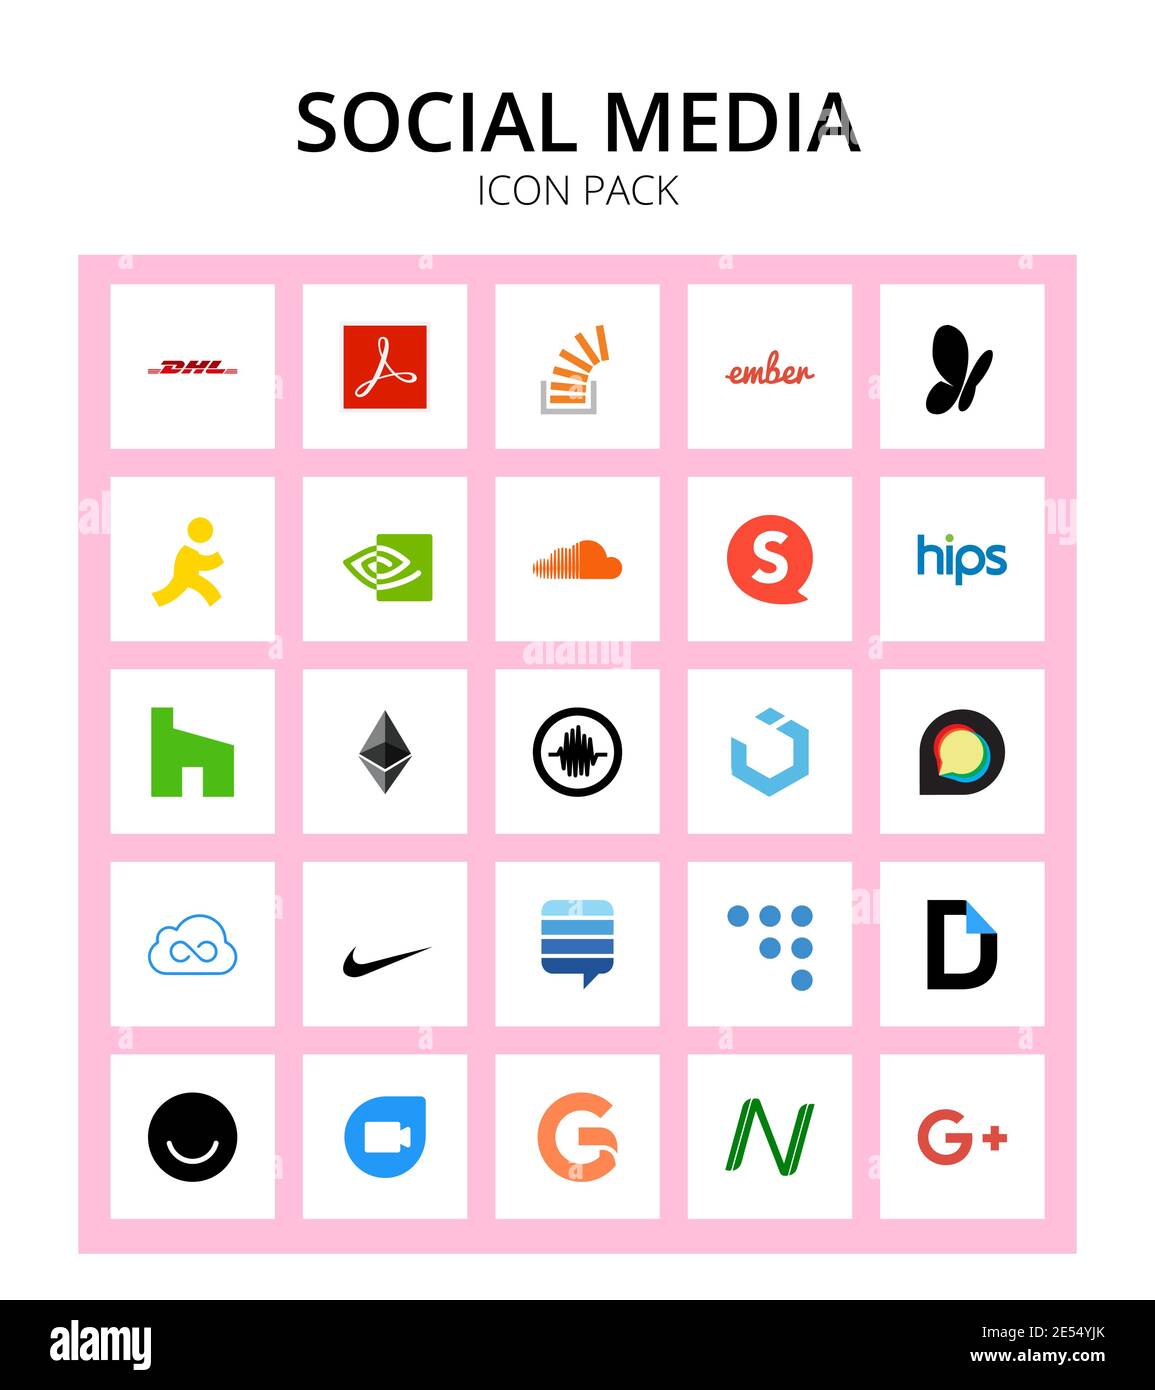 SocialMedia uikit, commons, nvidia, creative, houzz Editable Vector Design Elements Stock Vector